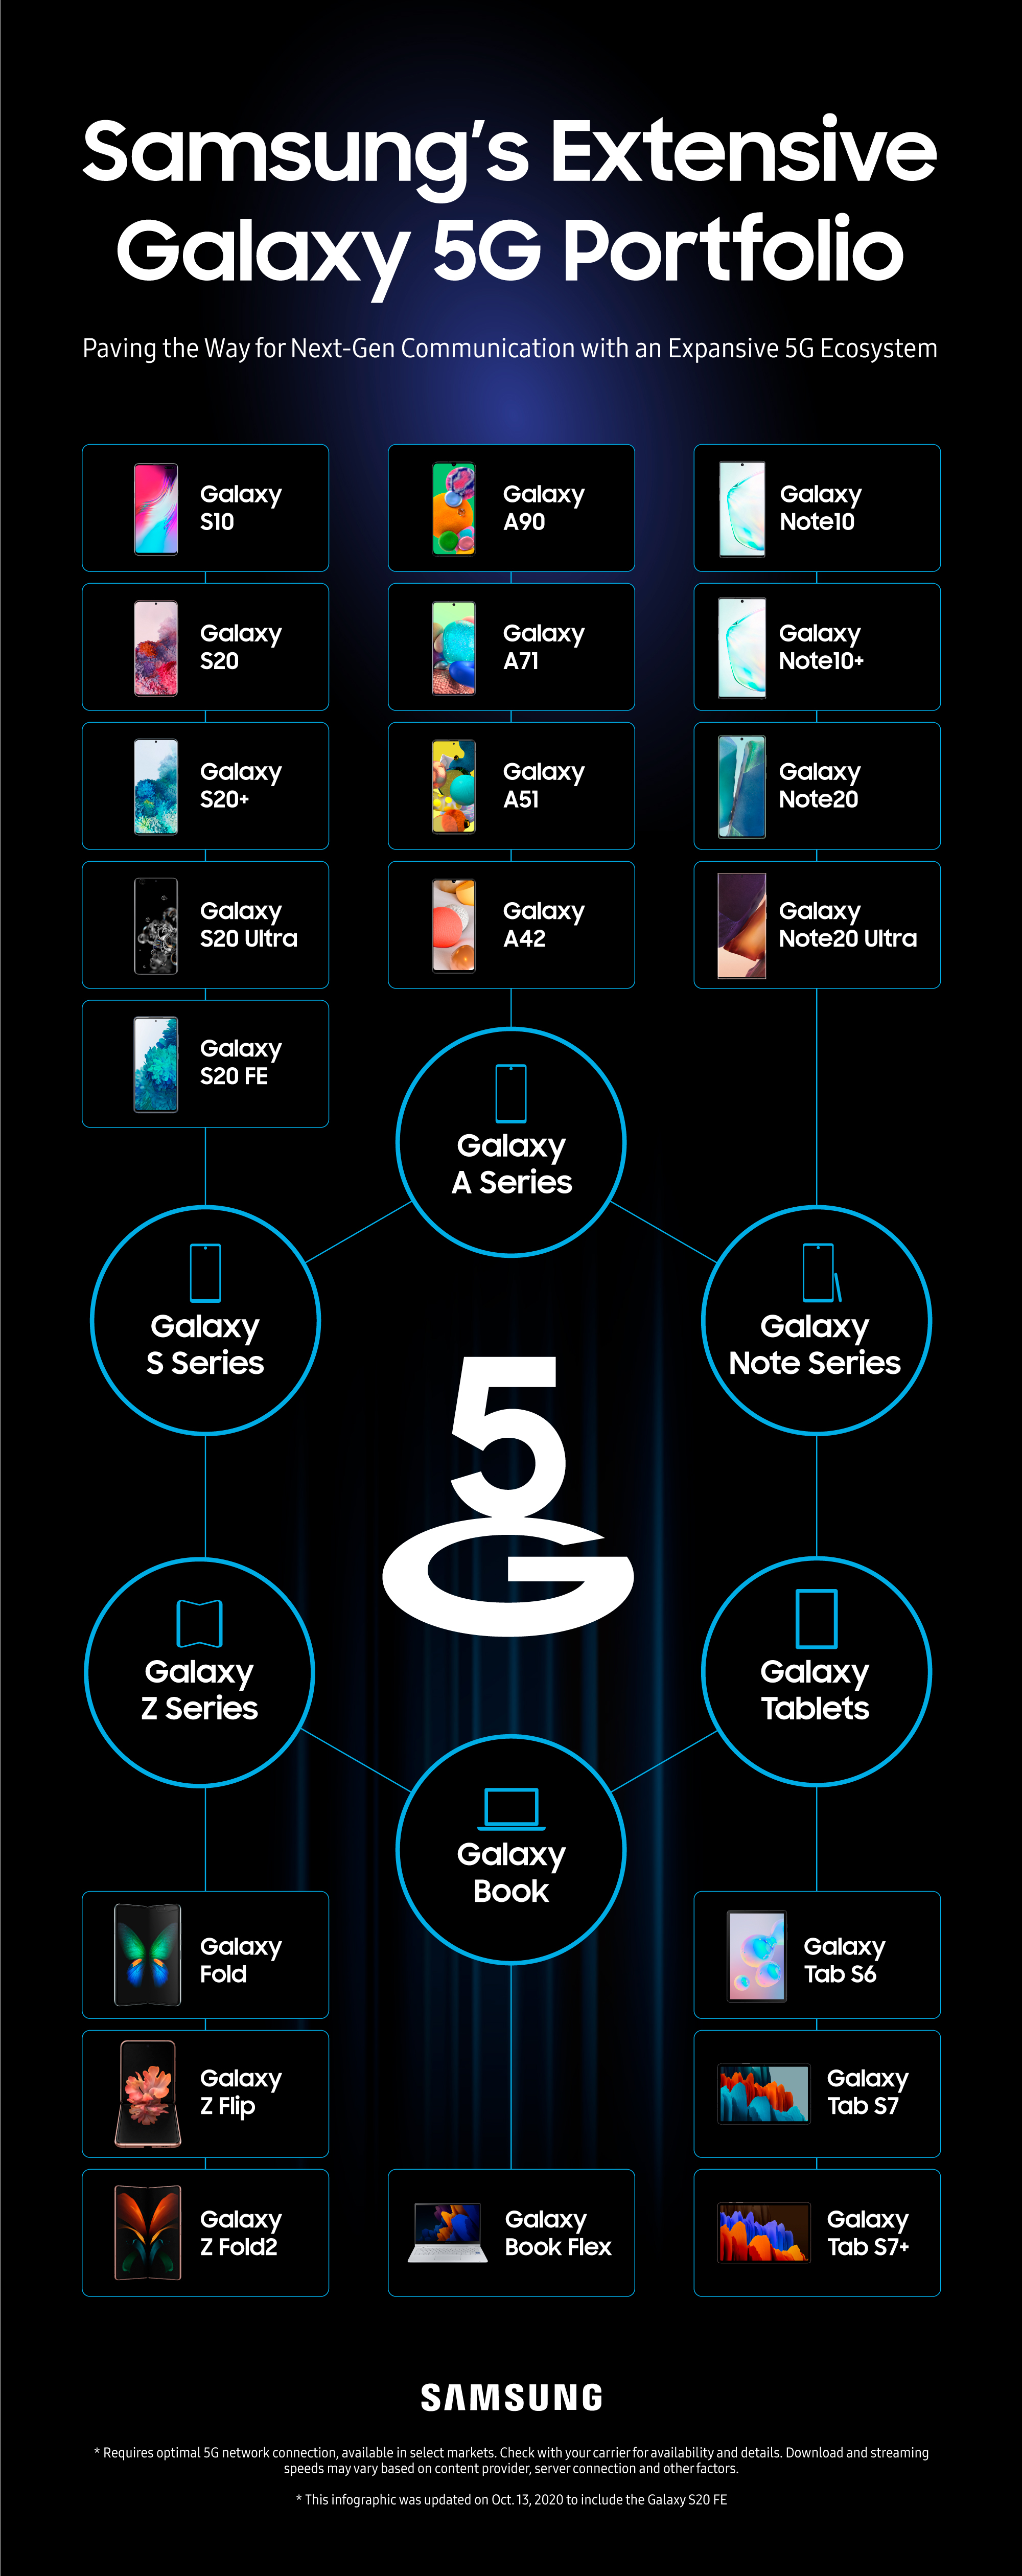 The entire 5G portfolio from Samsung Mobile